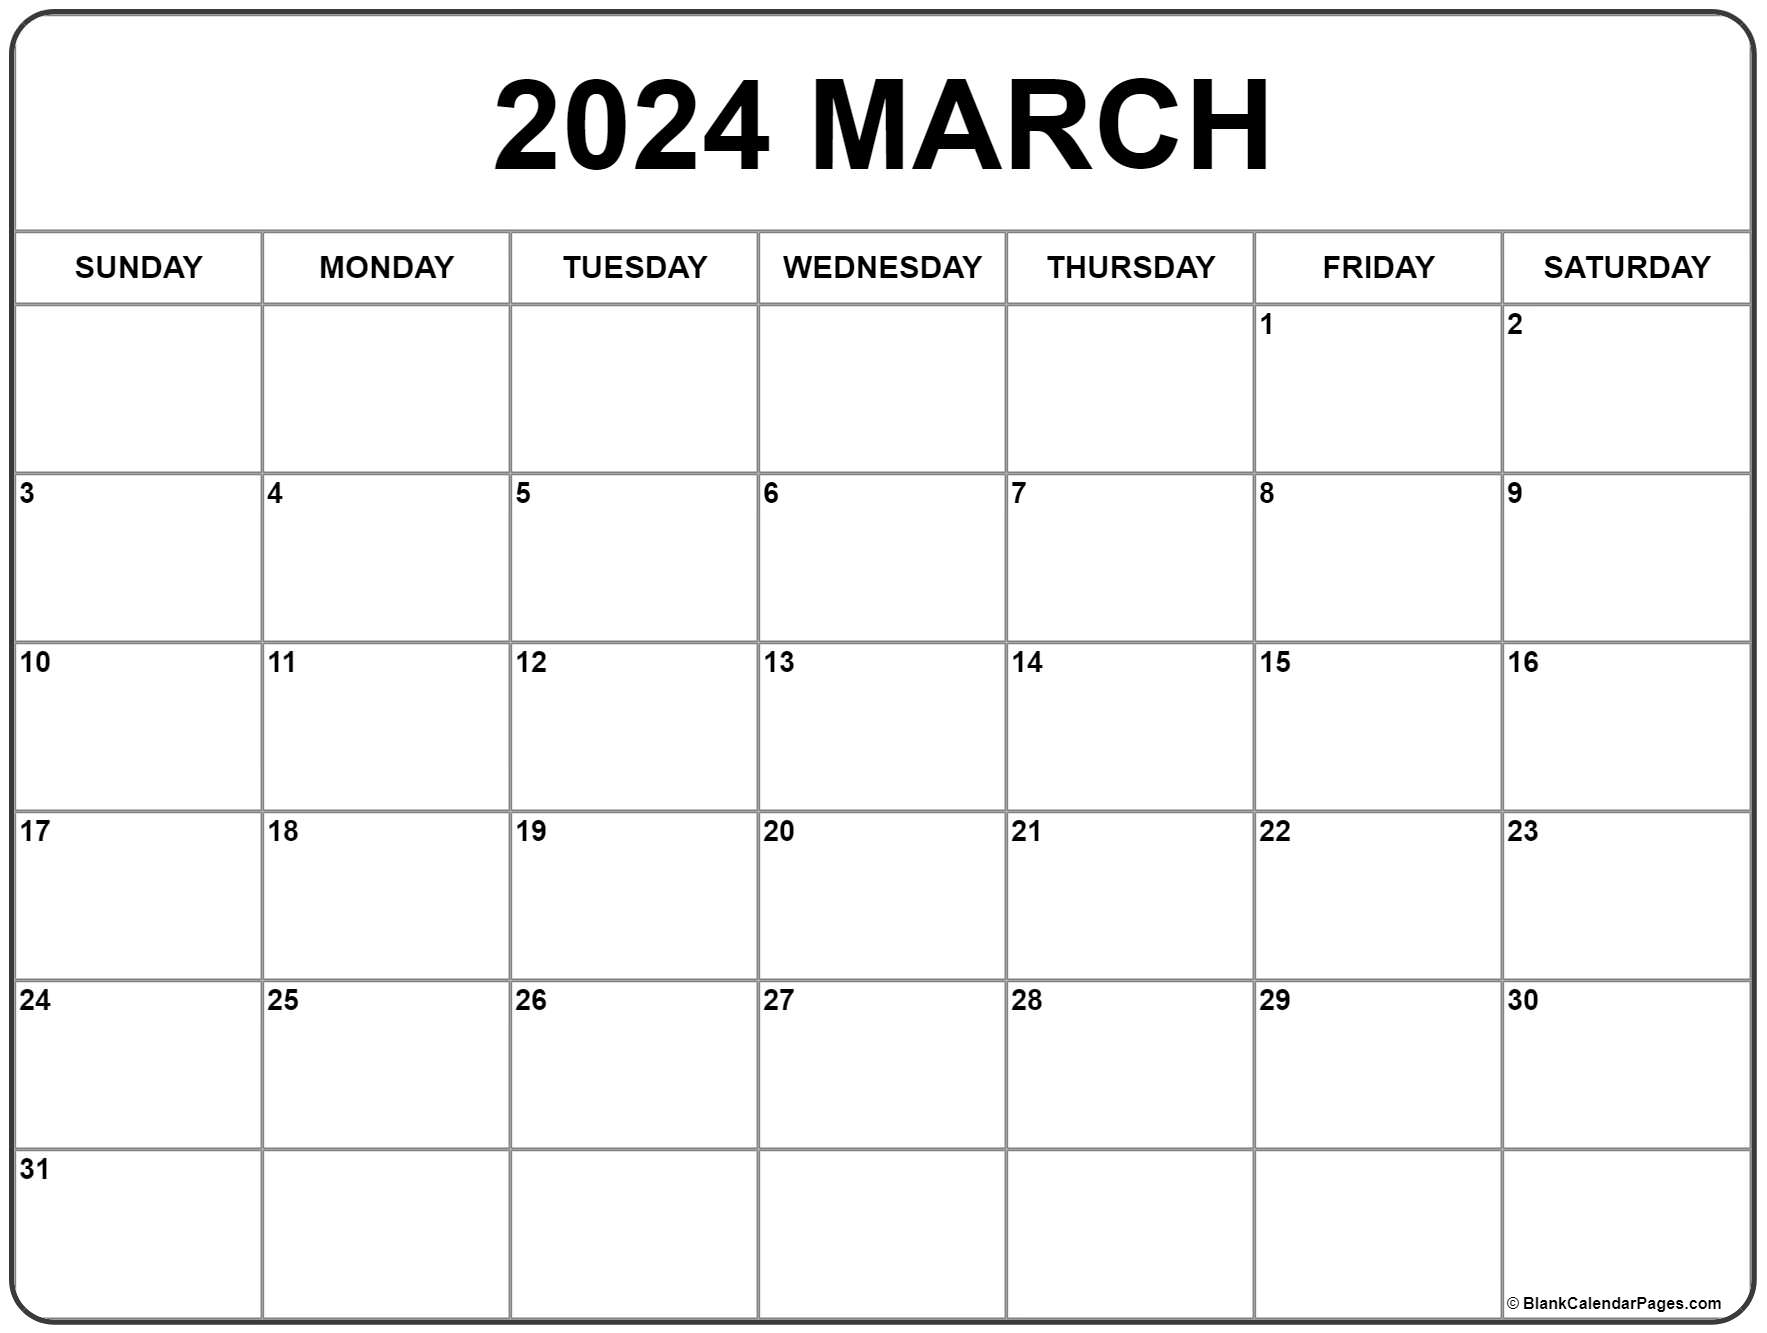 2021 Calendar March March 2021 calendar | free printable monthly calendars